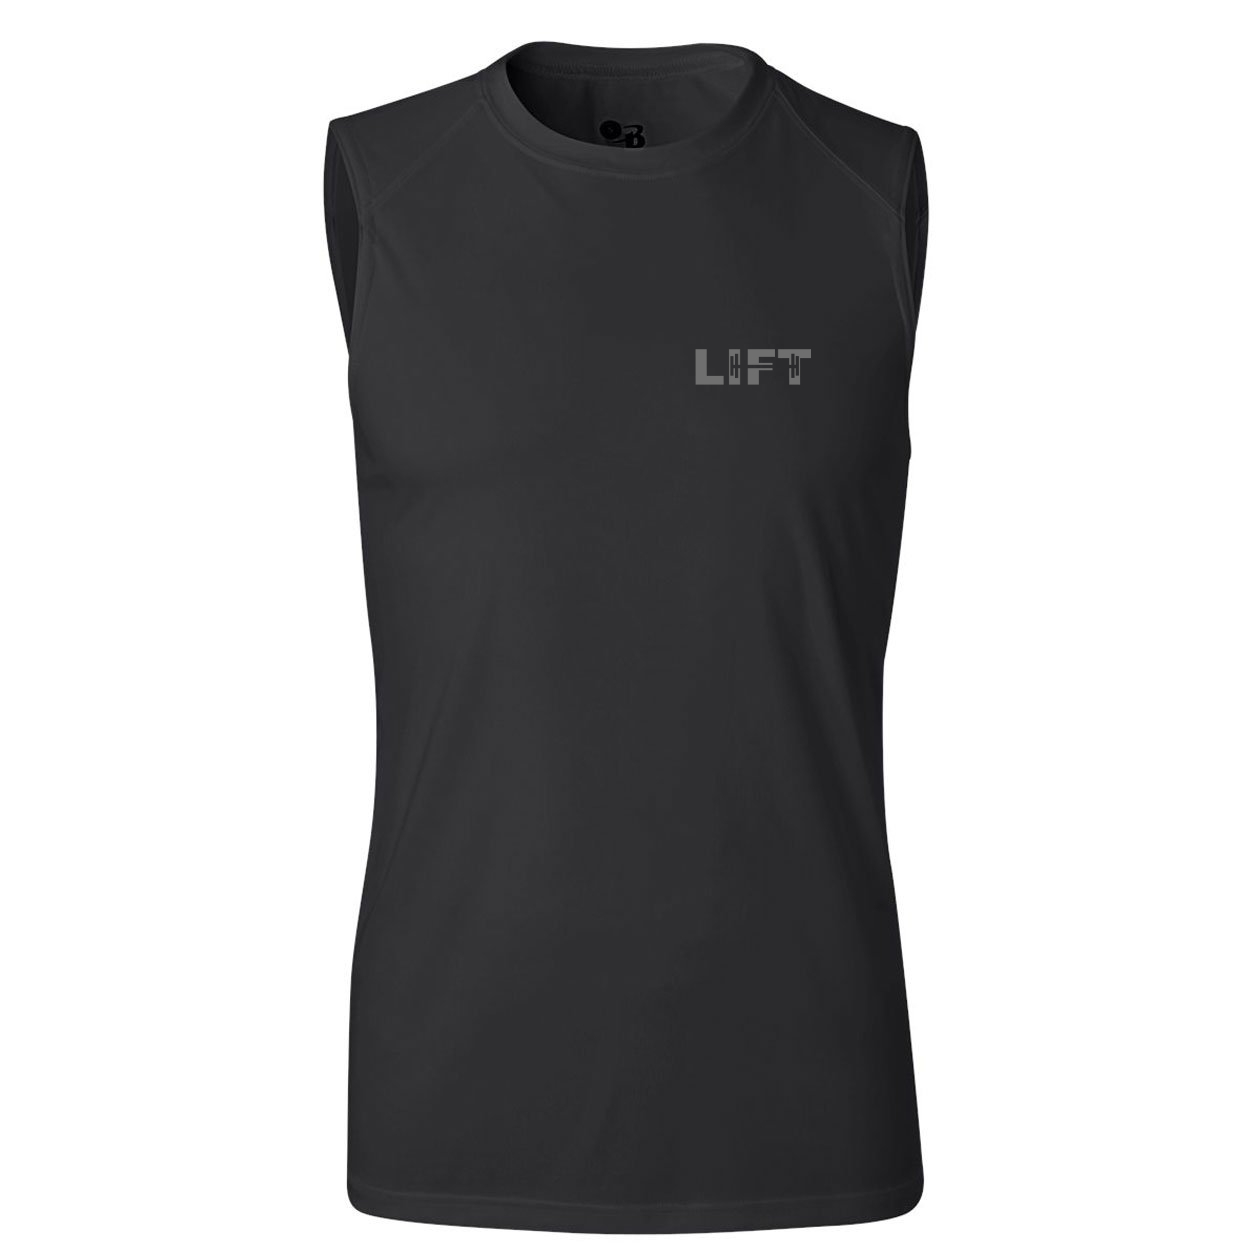 Lift Barbell Logo Night Out Unisex Performance Sleeveless T-Shirt Black (Gray Logo)